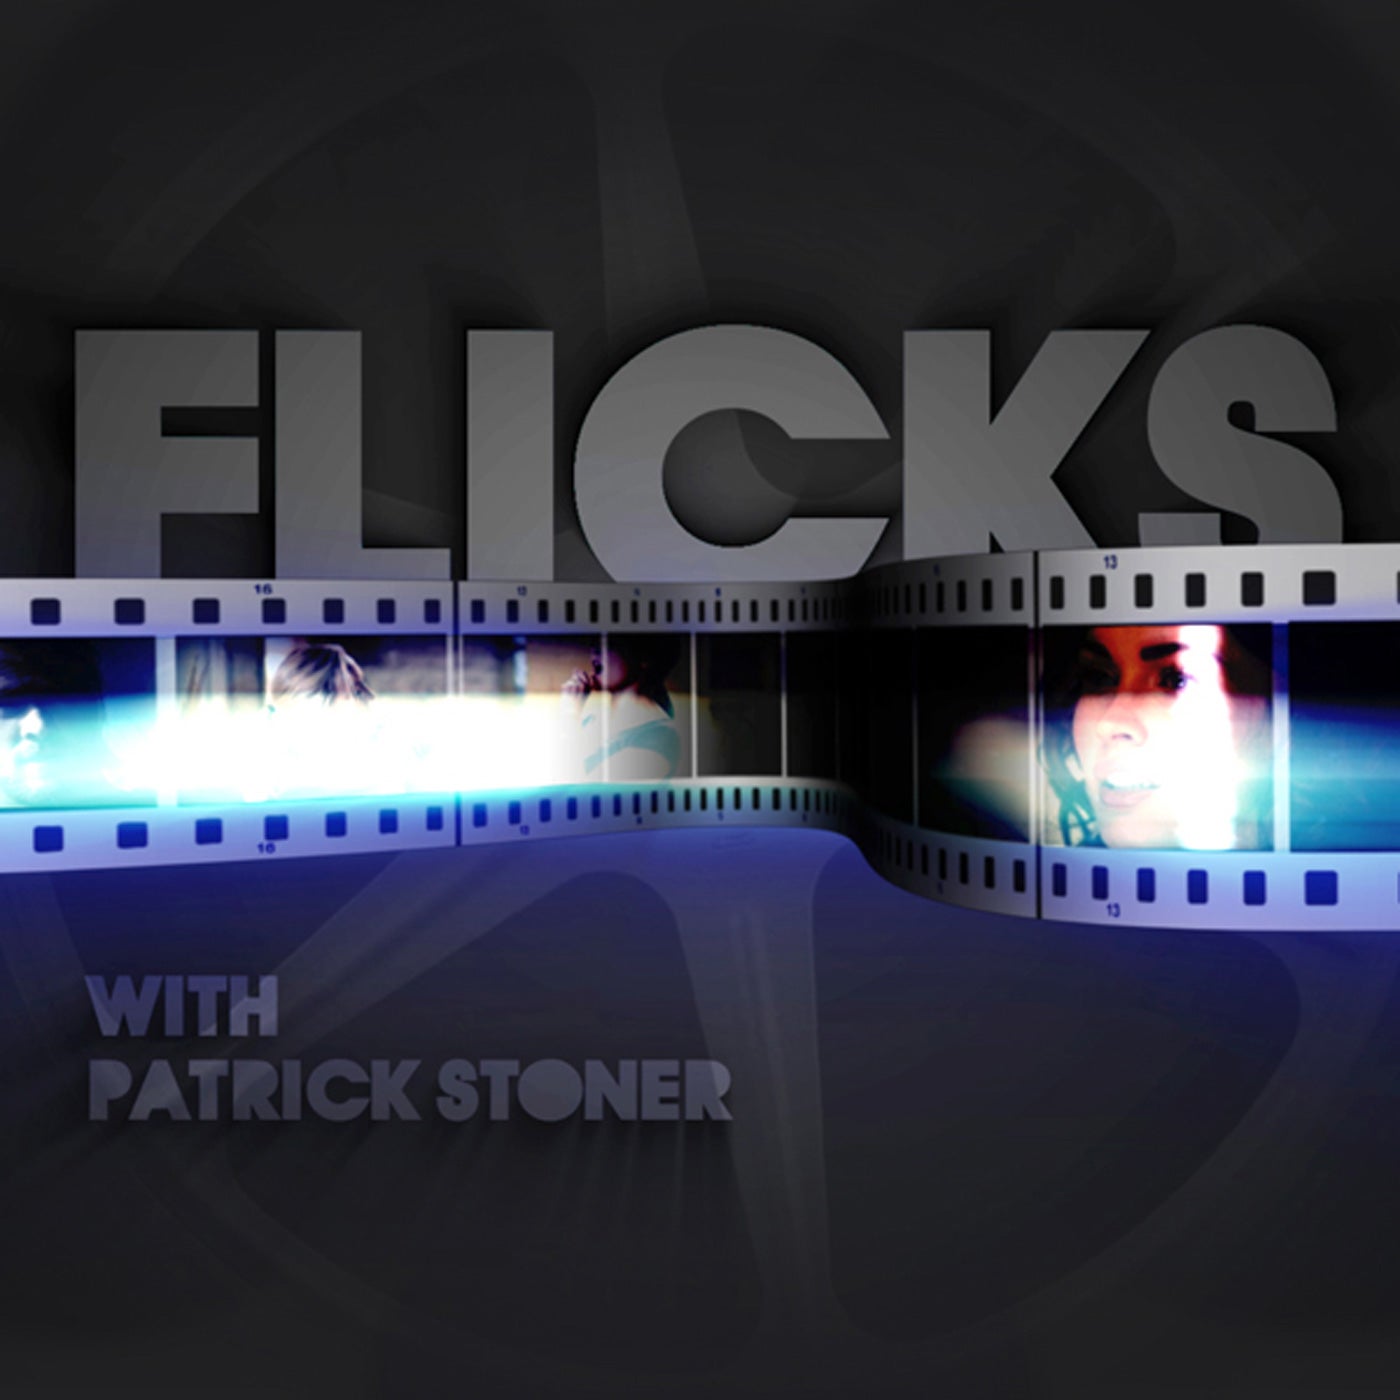 Flicks with Patrick Stoner